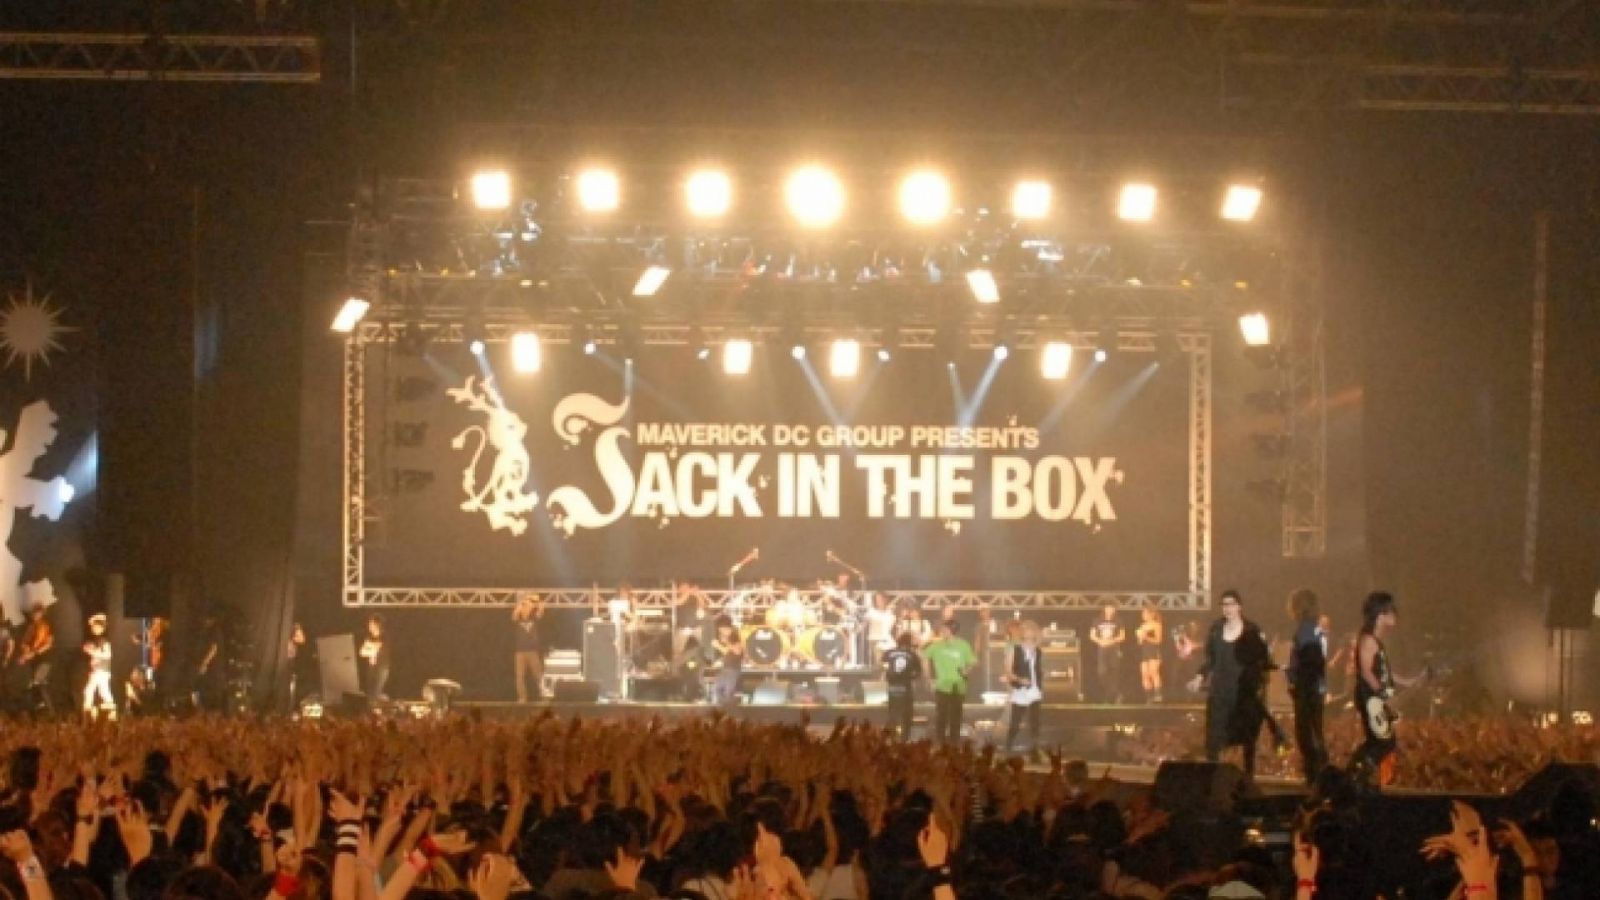 JACK IN THE BOX 2010 diffusé en streaming © Maverick DC Group